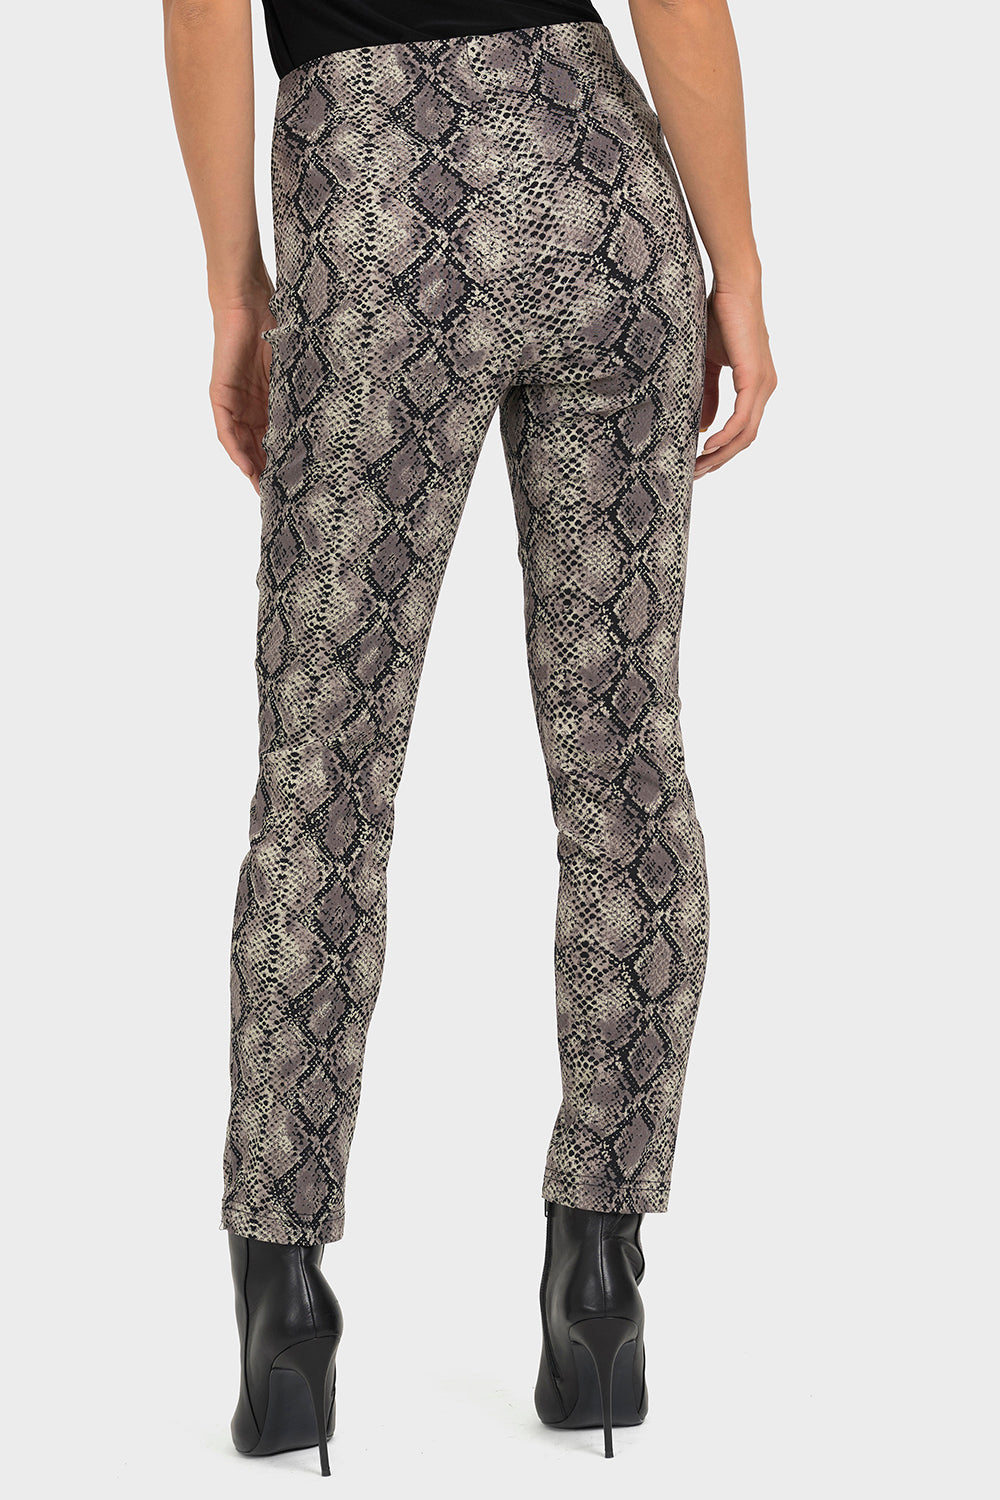 Joseph Ribkoff Multi Pants Style 193548